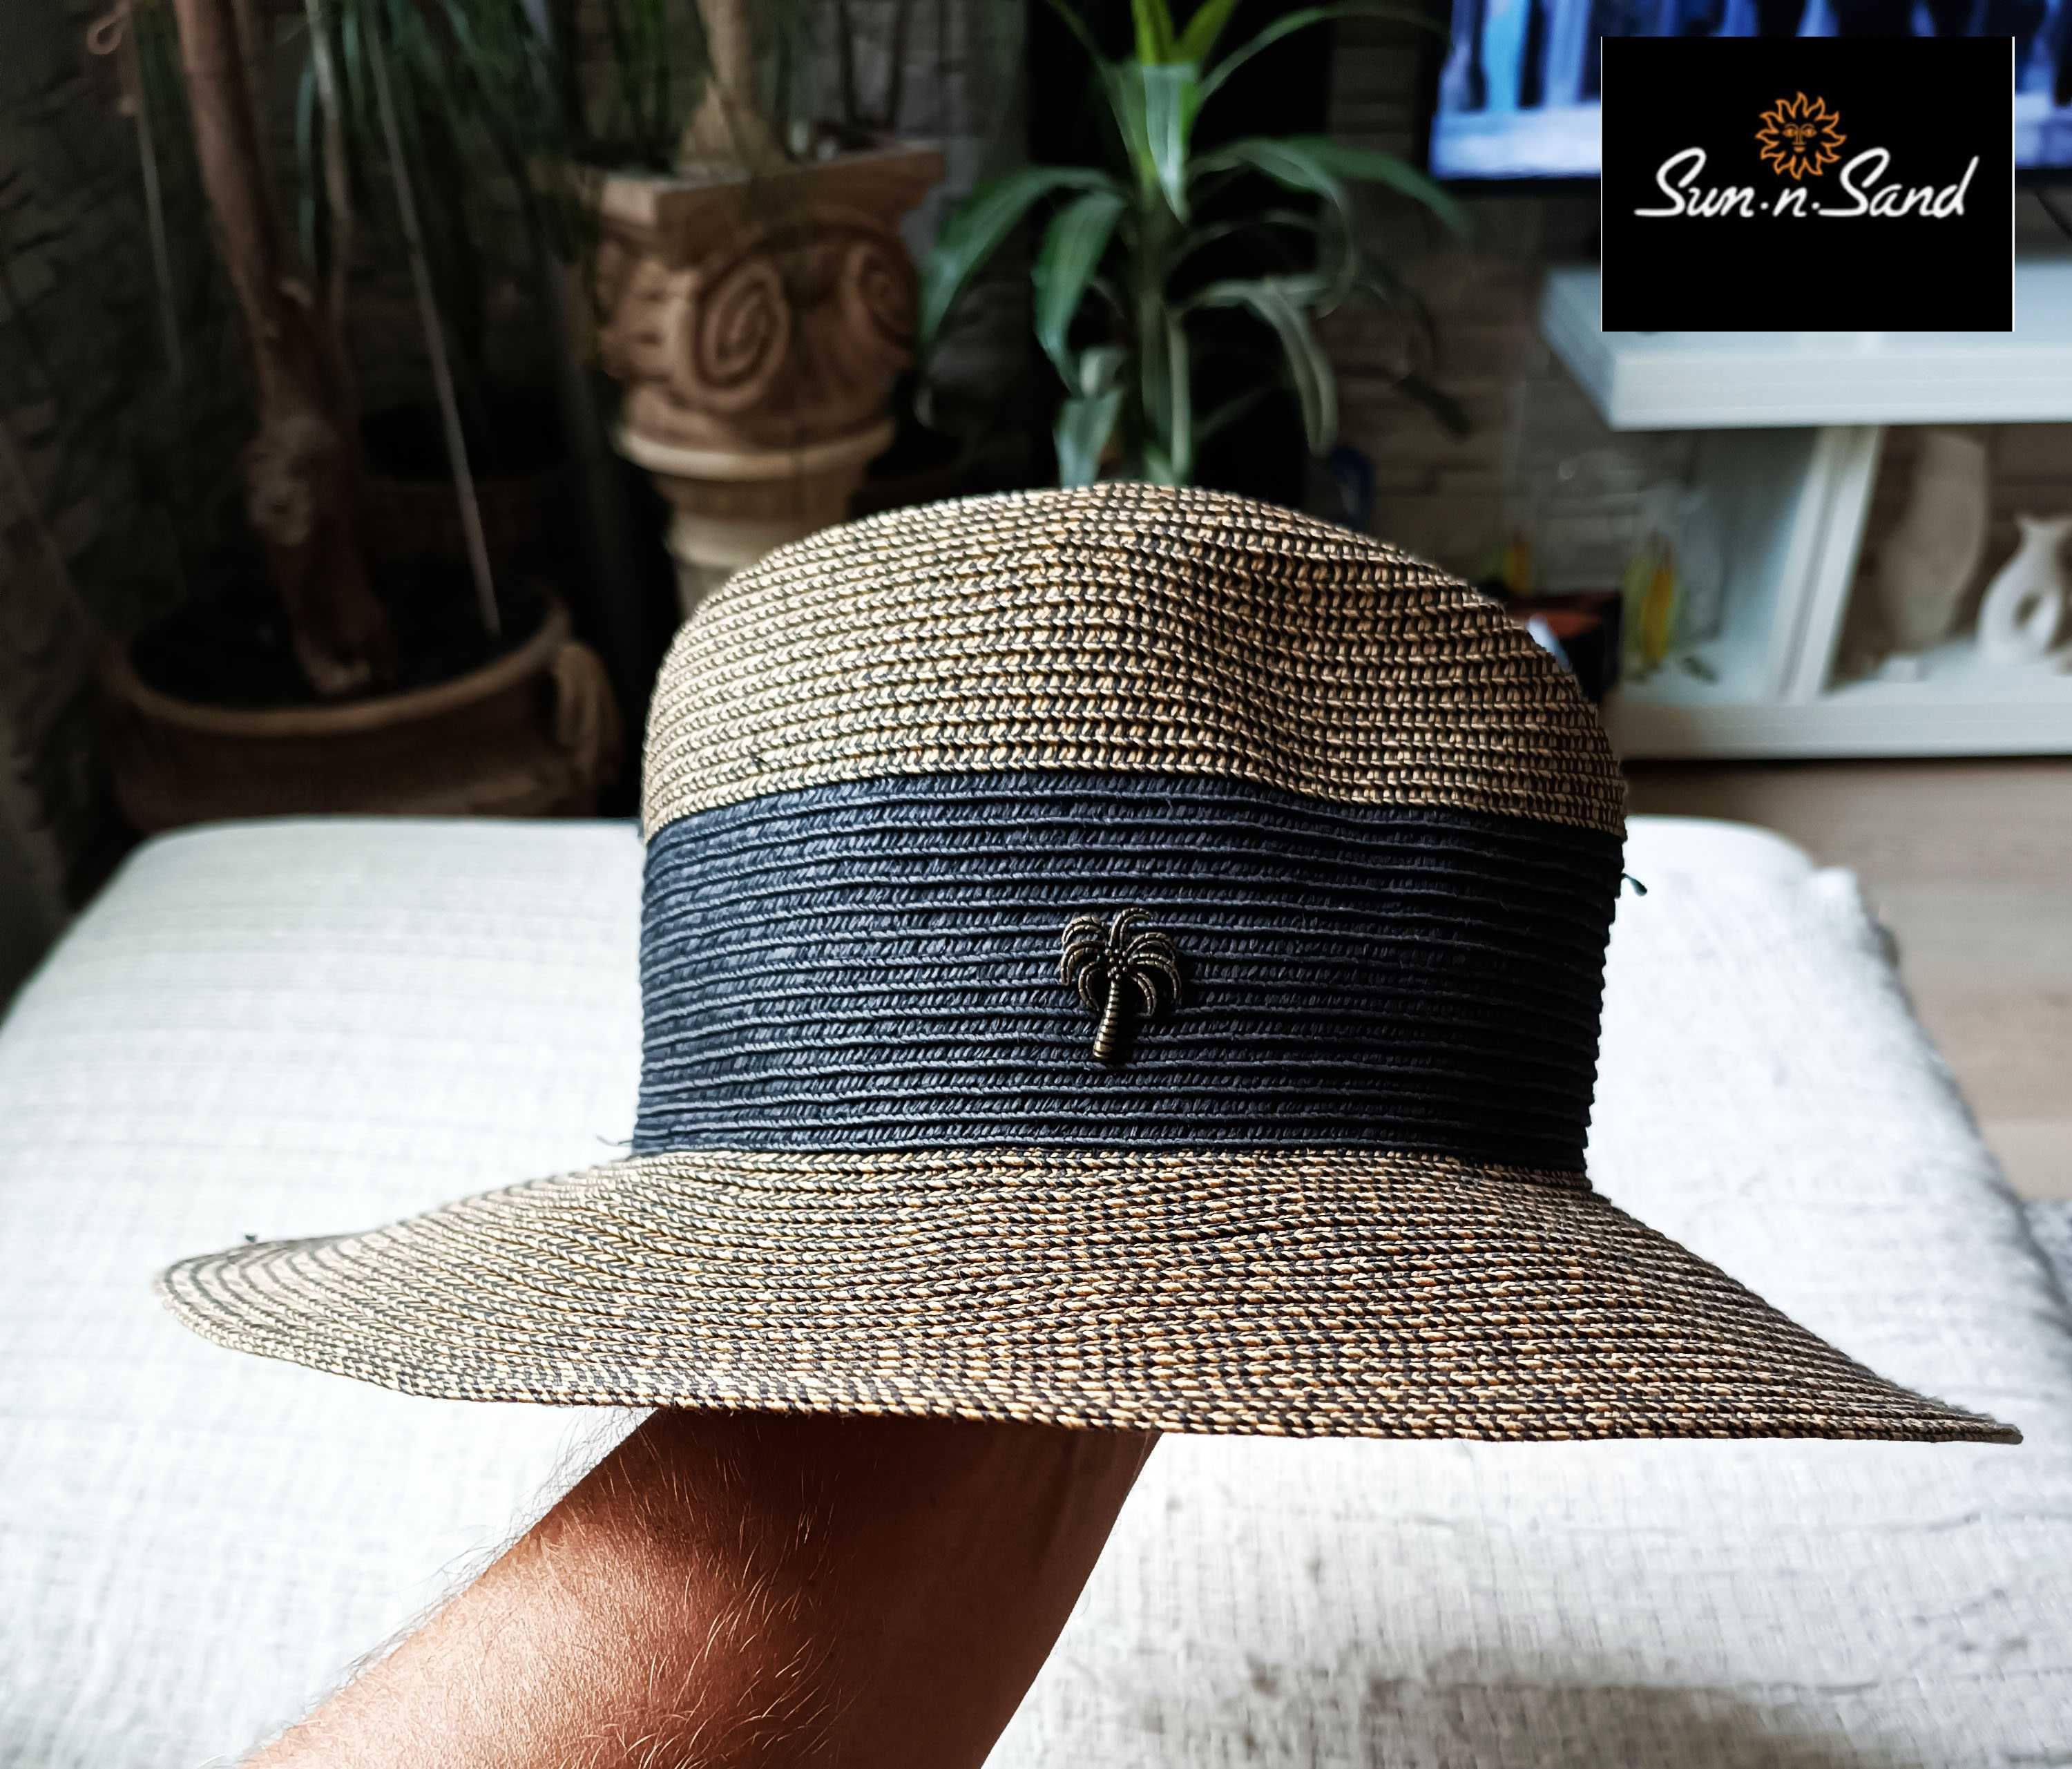 Шляпа Панама Sun’n’Sand. Оригинал. Новое состояние. Супер качество